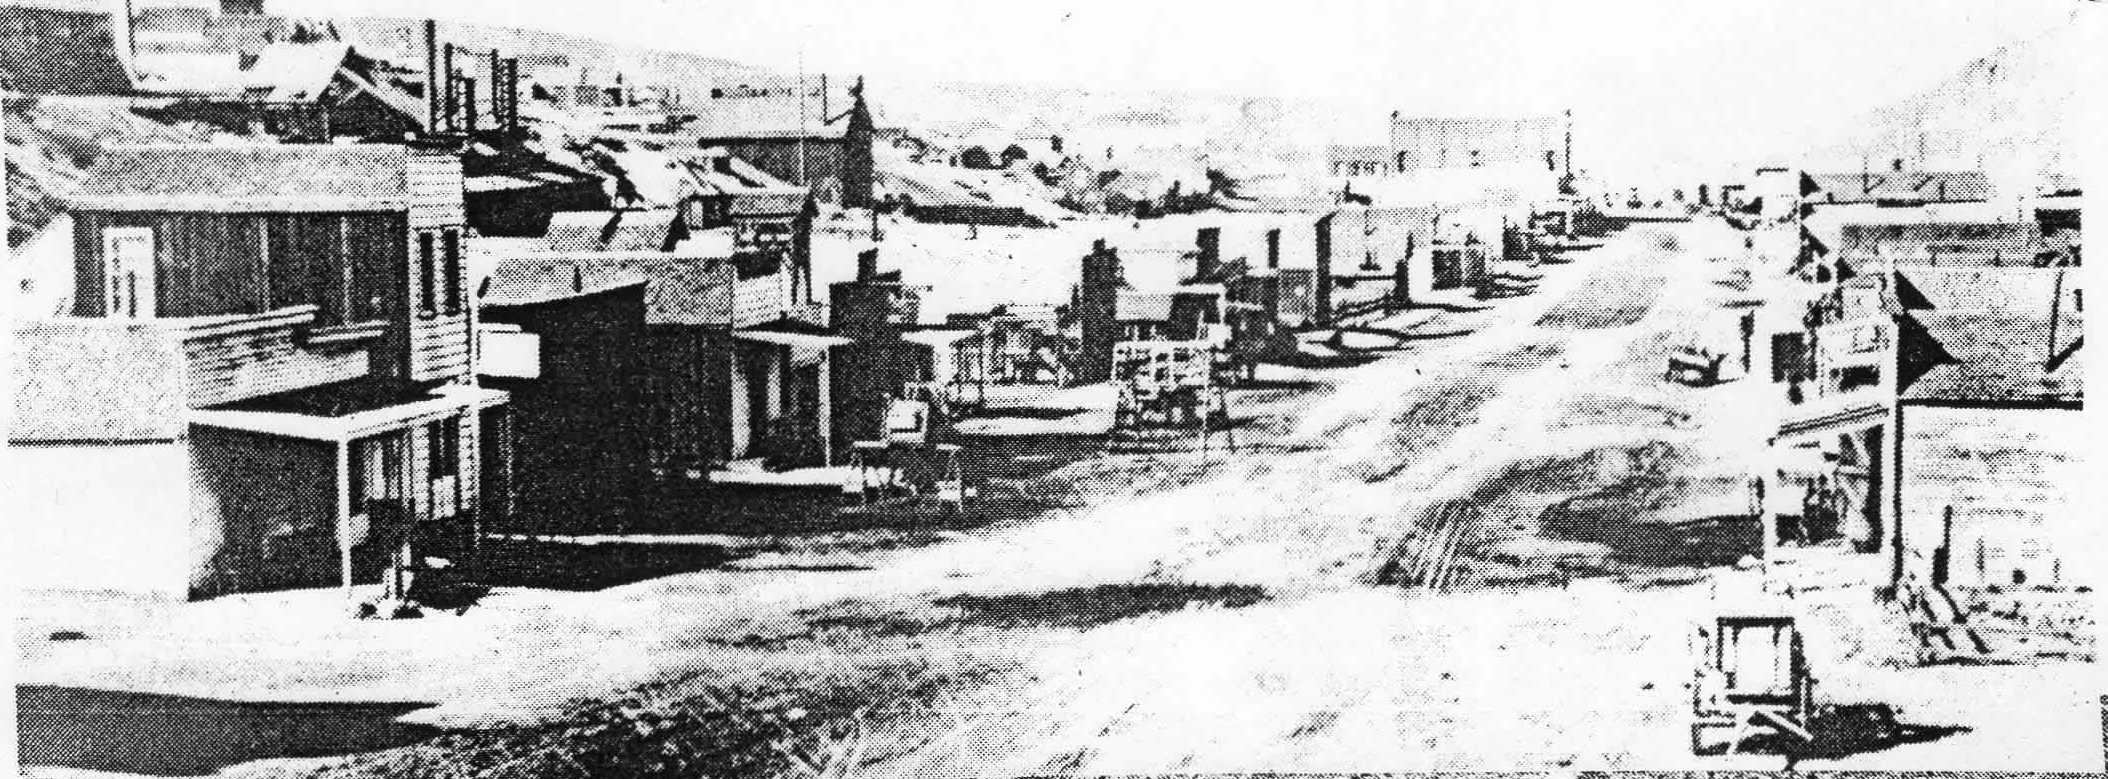 Downtown Eureka in 1870s